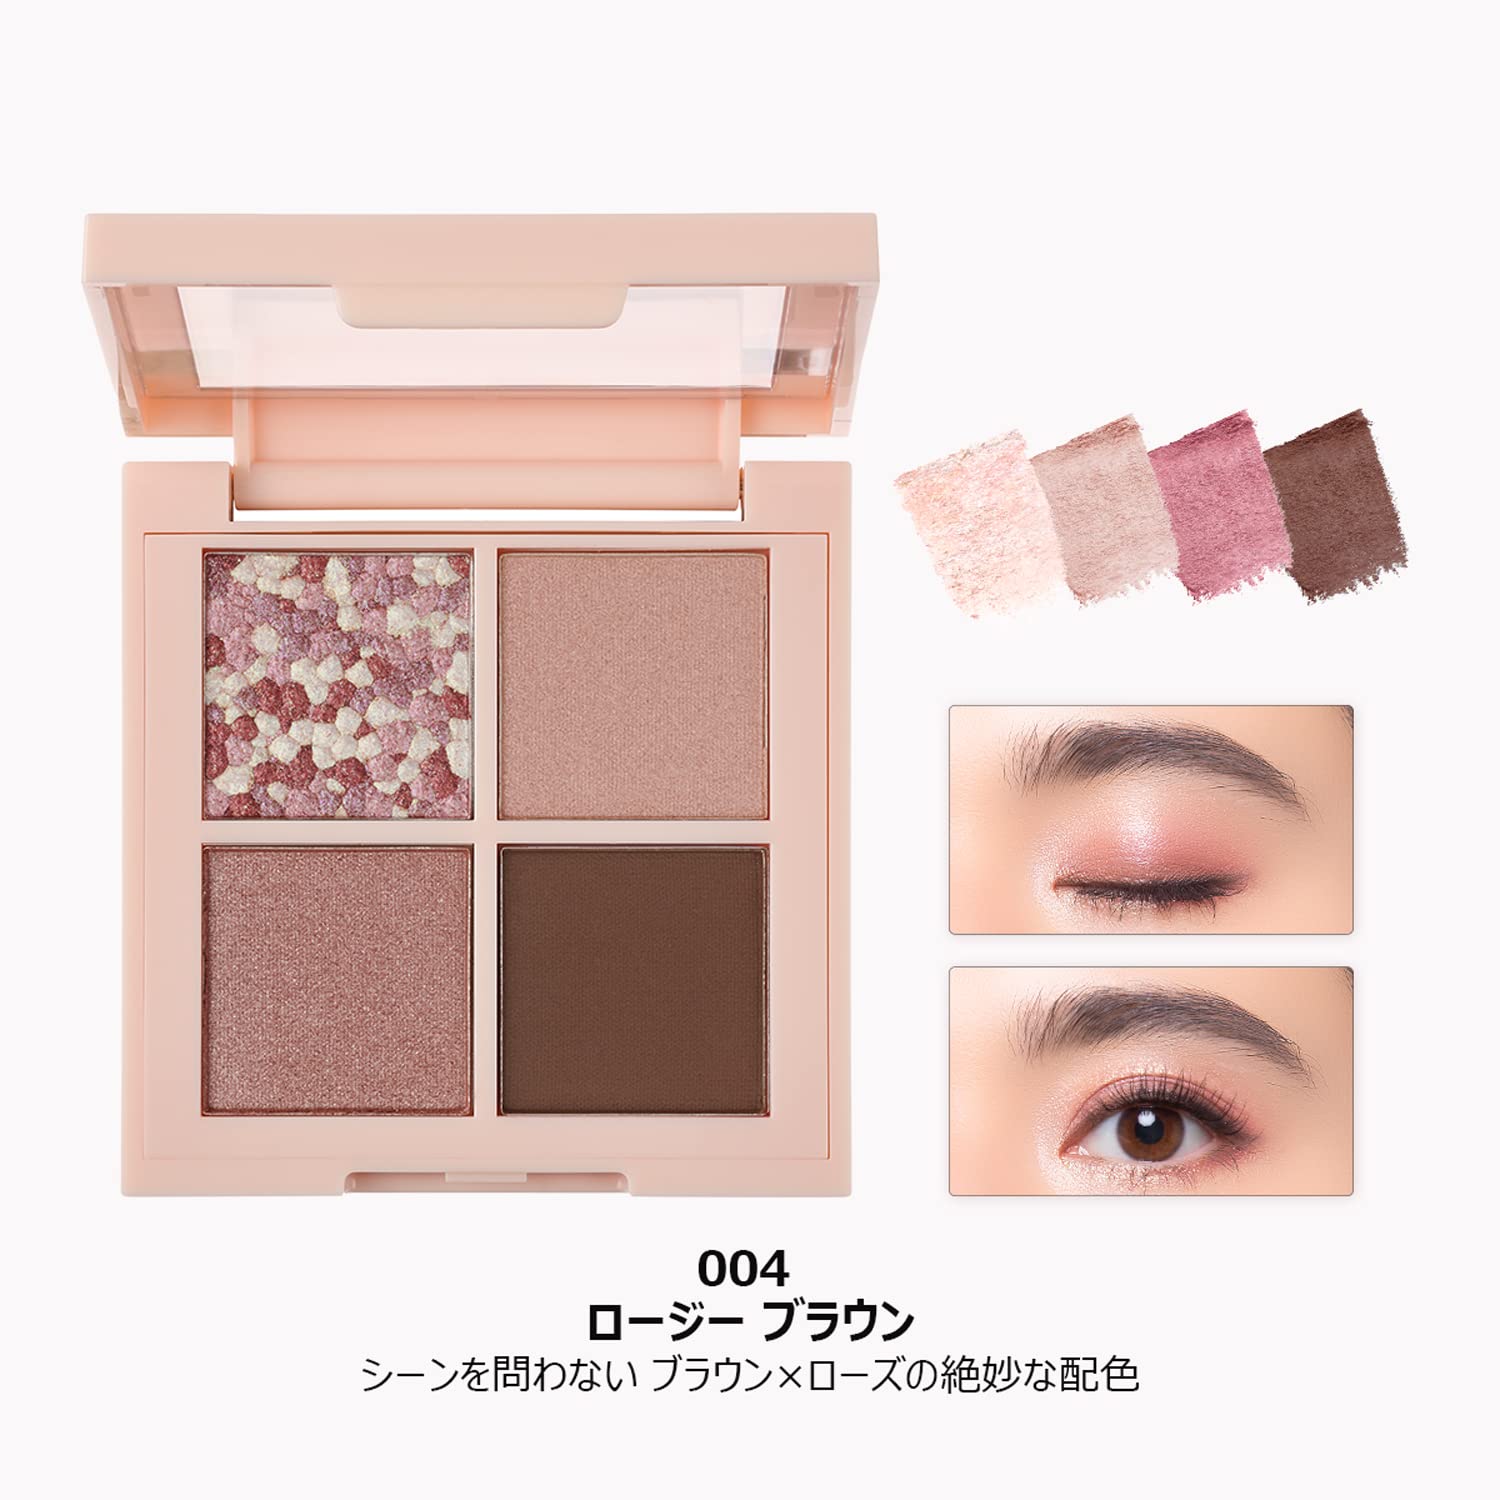 Maquillage Japan Eye Color N Powder Eye Shadow Gd825 Clear Color Refill 1.3G